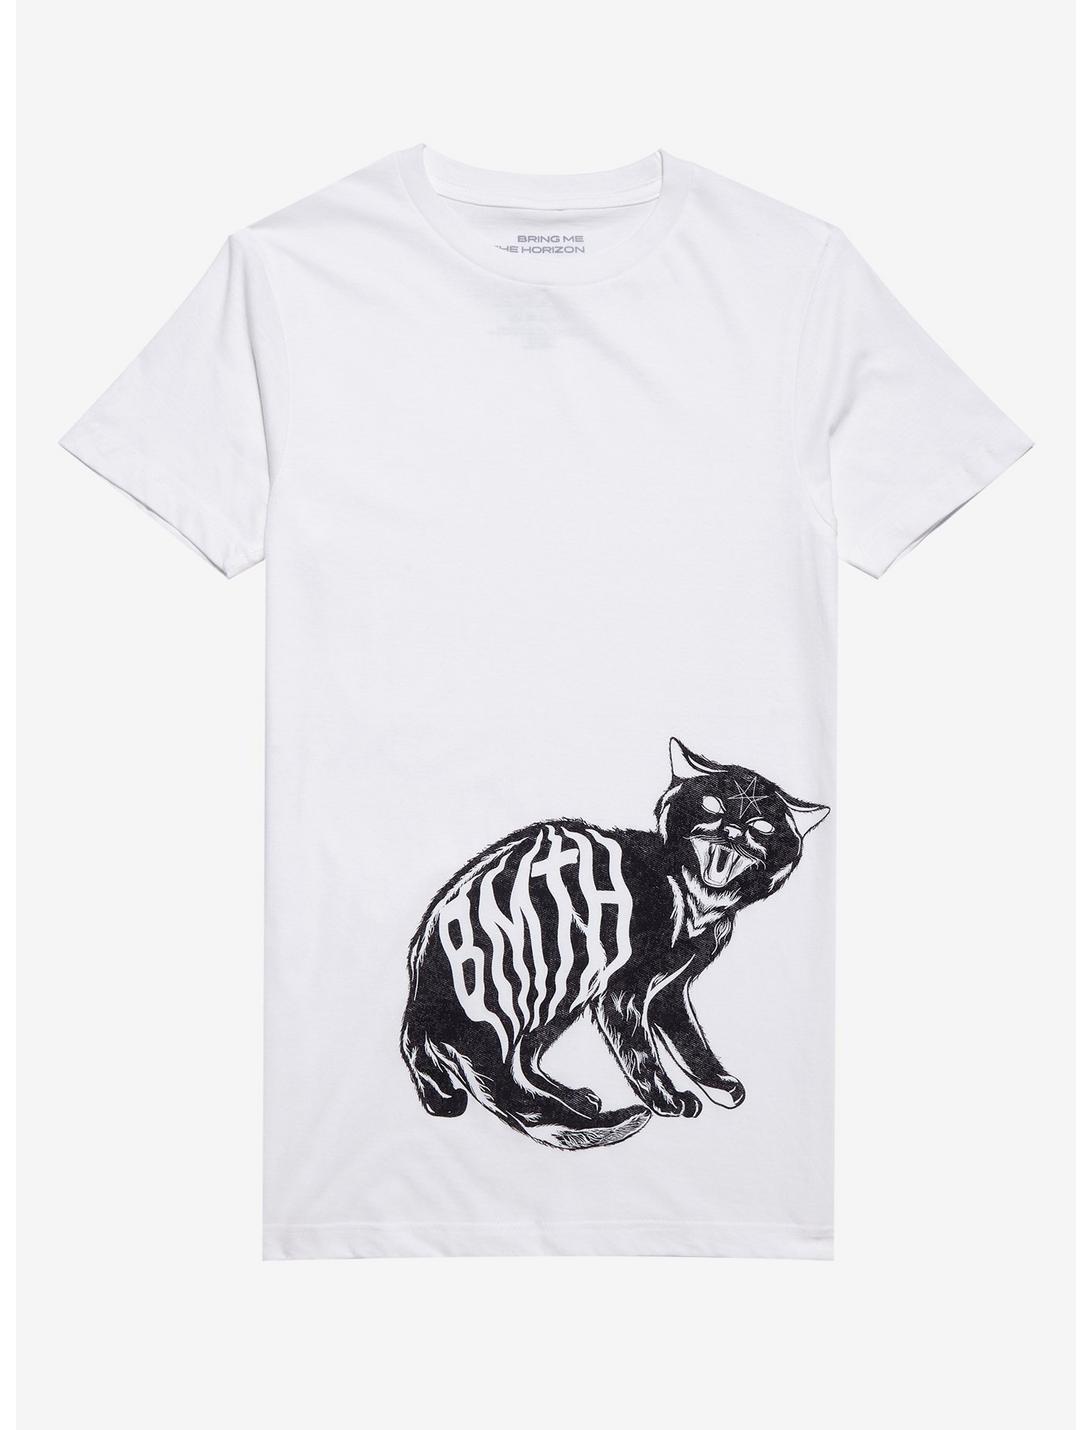 Bring Me The Horizon Black Cat Boyfriend Fit Girls T-Shirt, NATURAL, hi-res